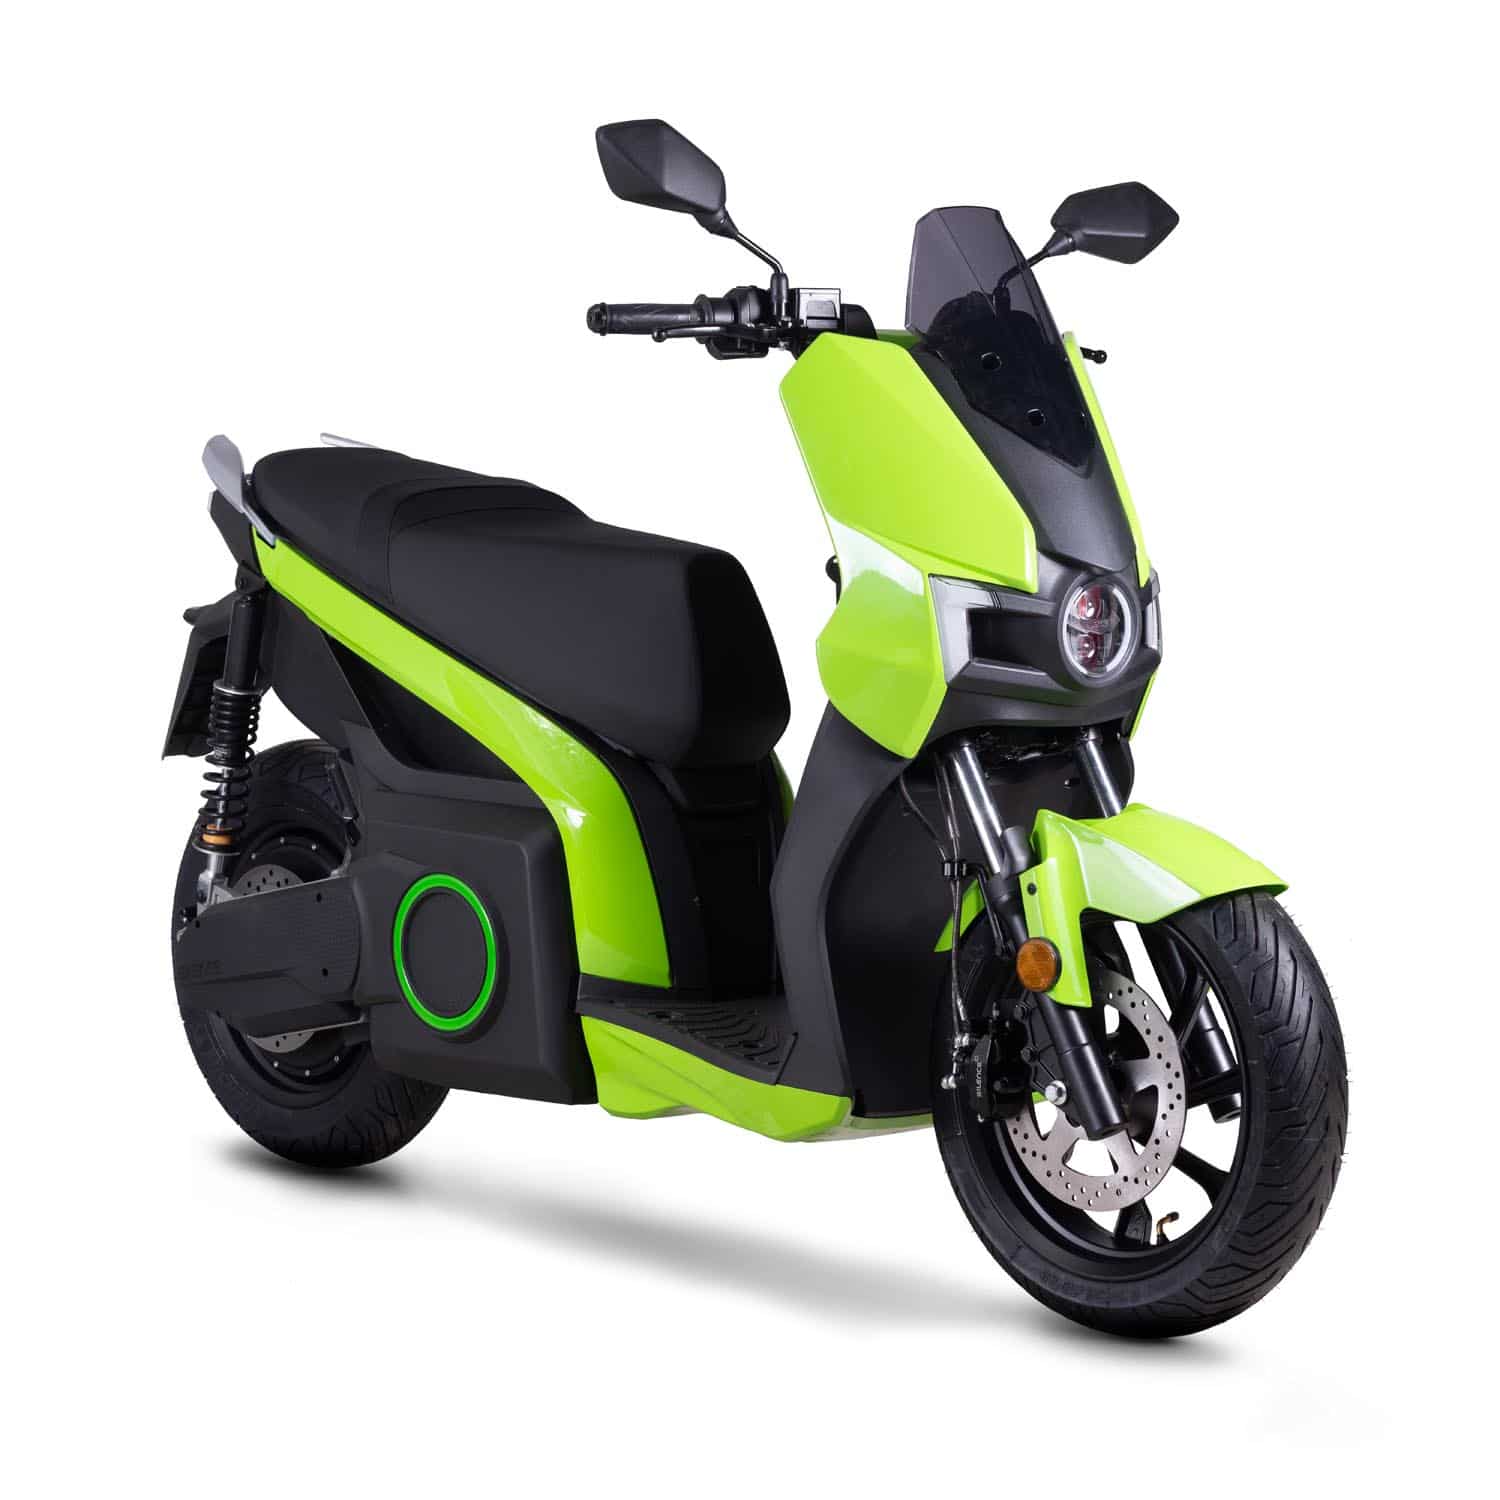 Compteur digital moto scooter. - Maxi Pièces 50